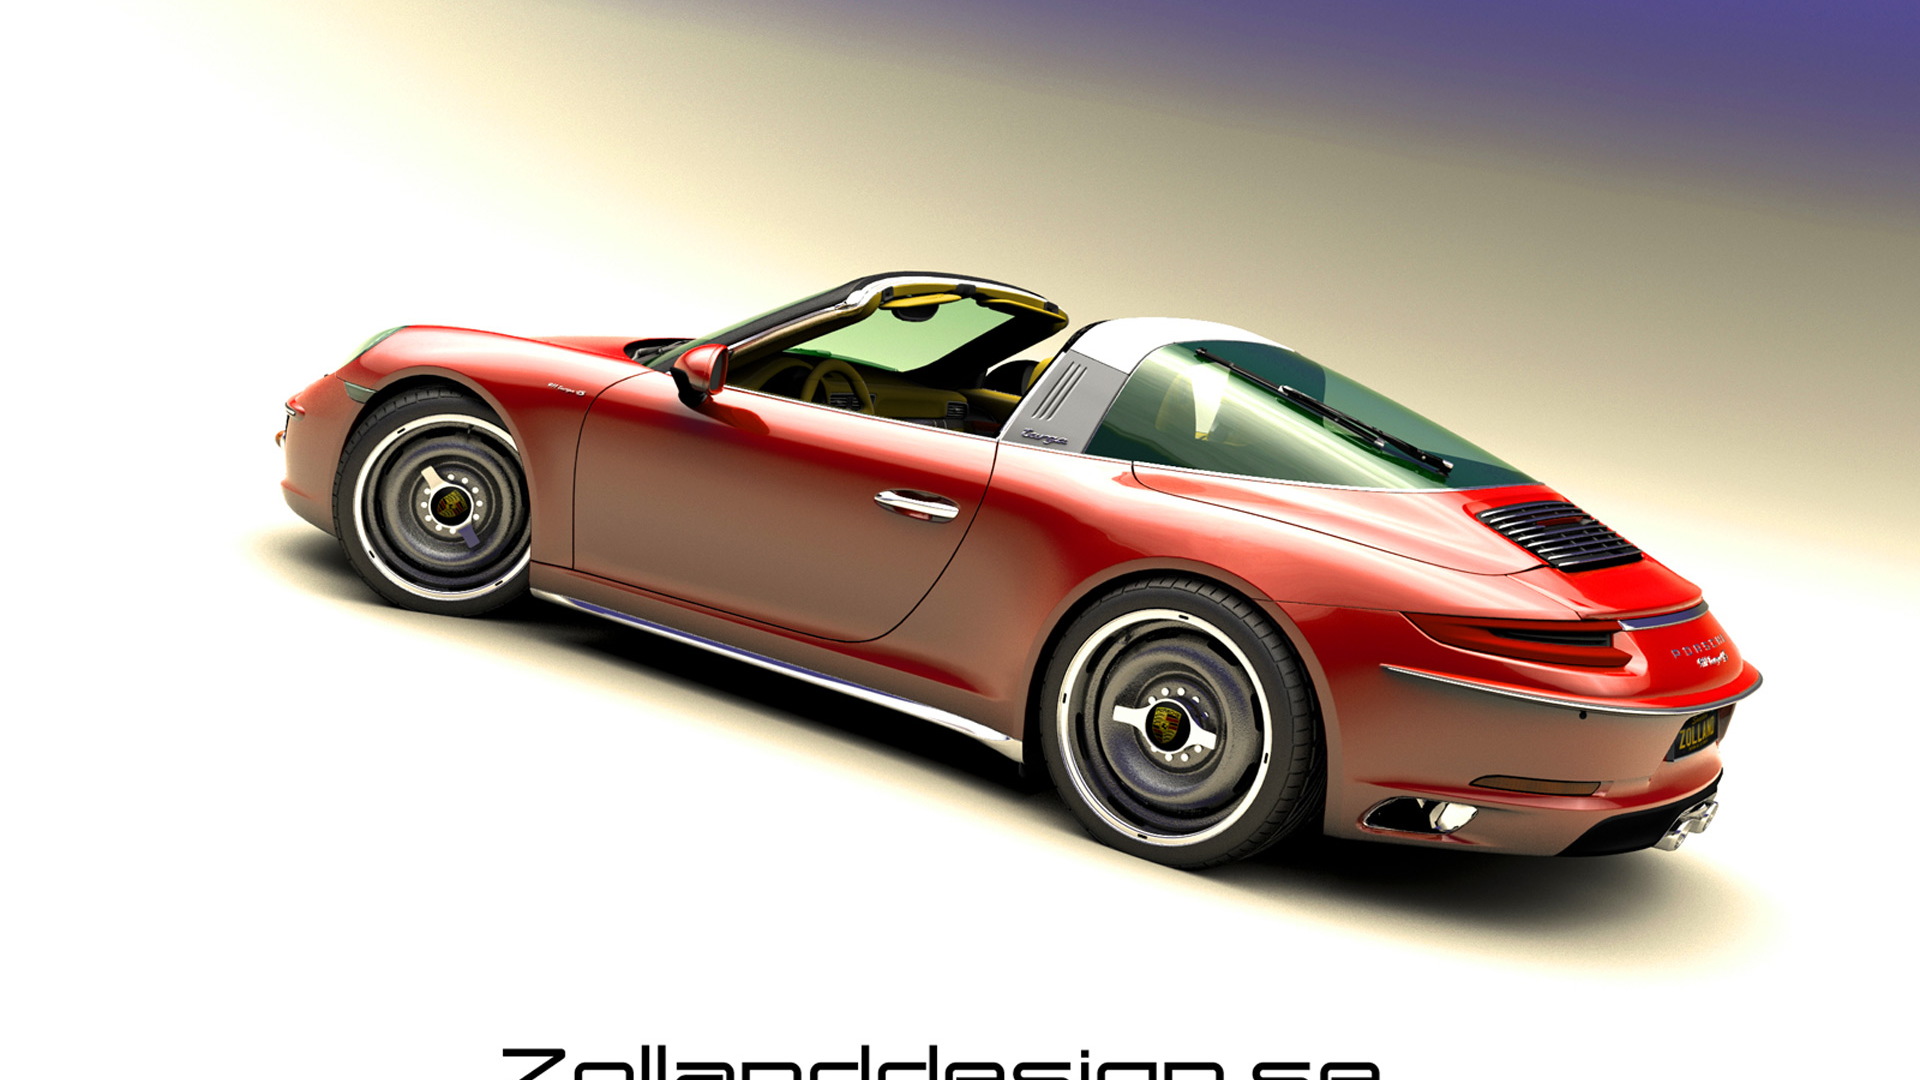 Zolland Design retro conversion for the 991-series Porsche 911